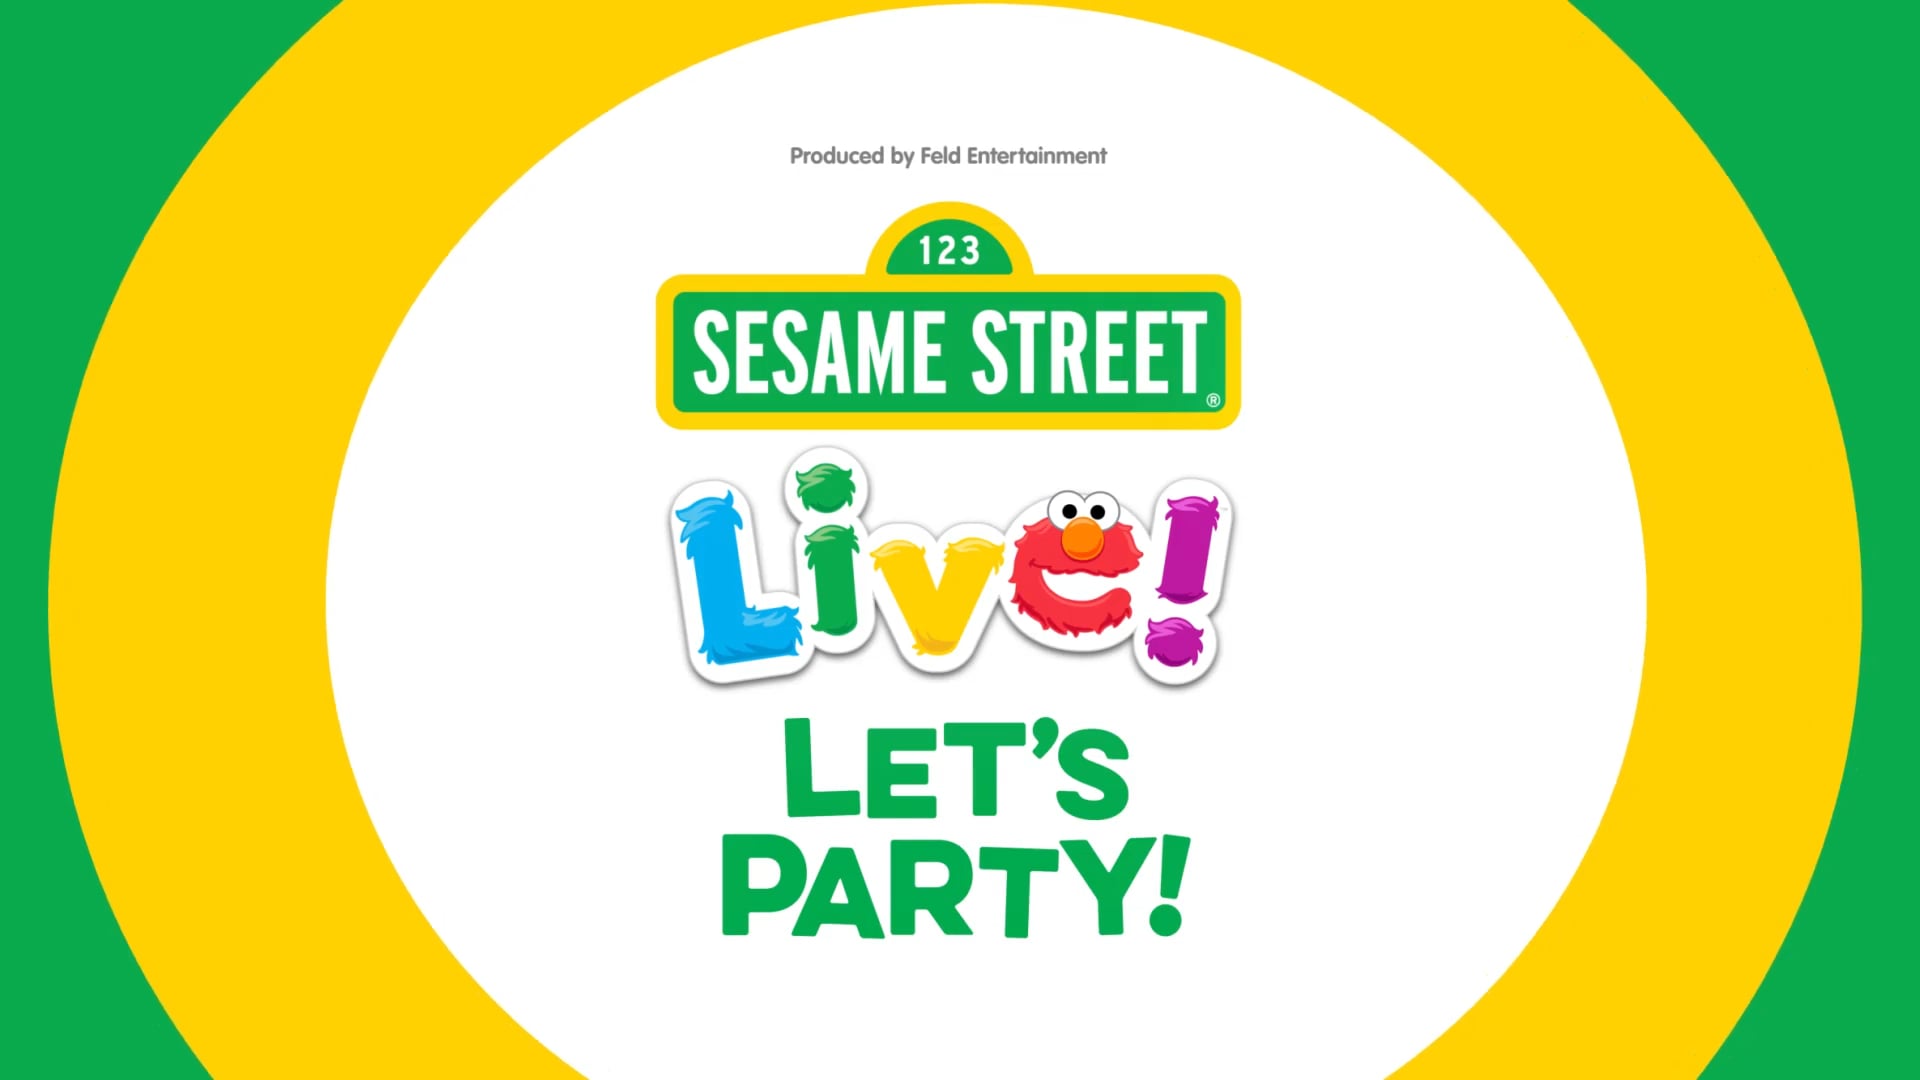 Sesame Street Live! Let's Party Website Video